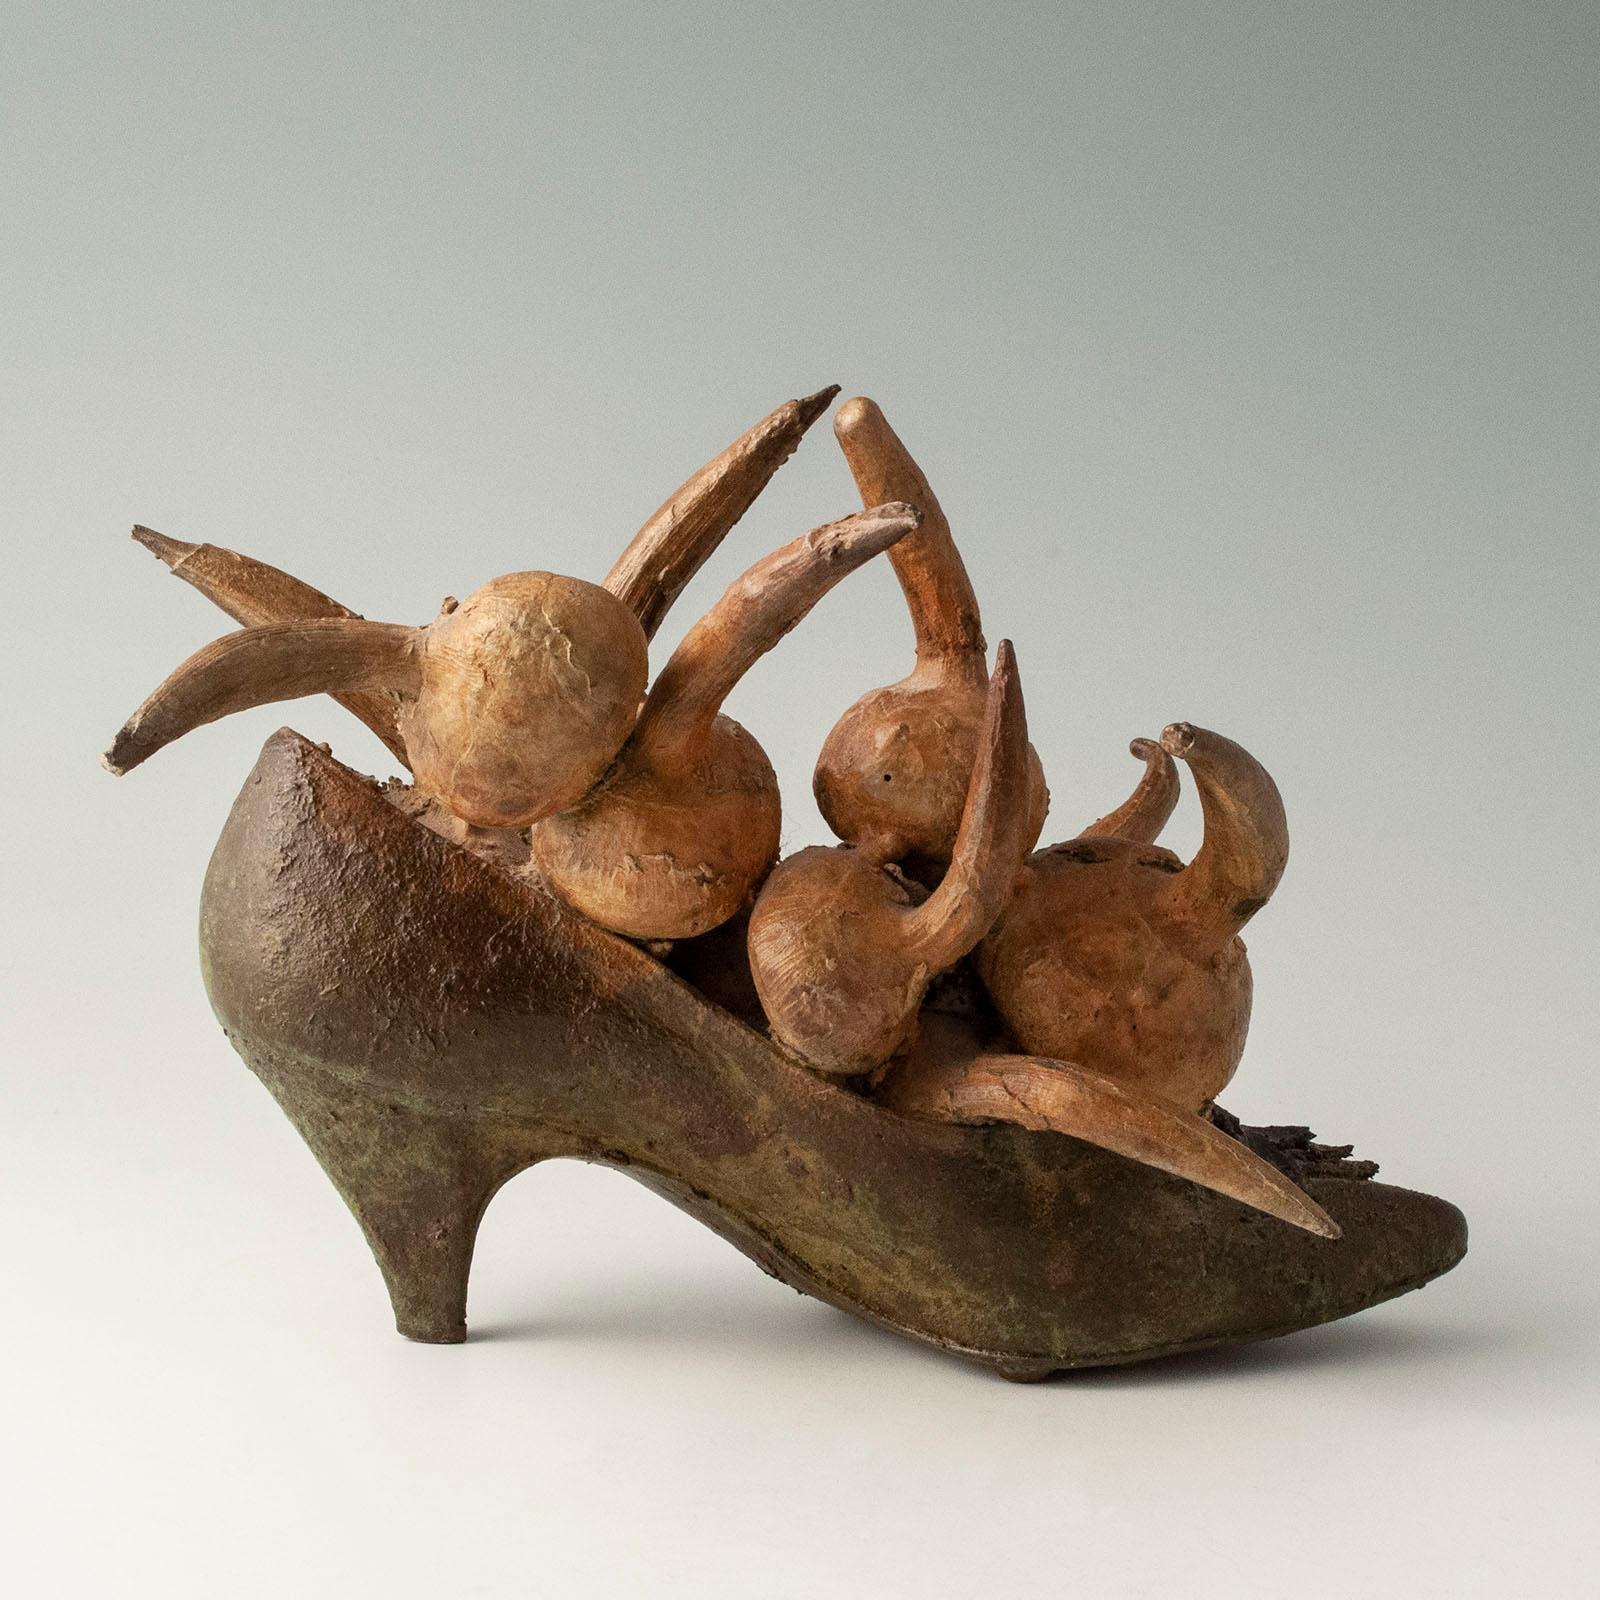 Post-Modern Steve Tobin Cast Bronze Shoe Sculpture with Onions, 1980s For Sale